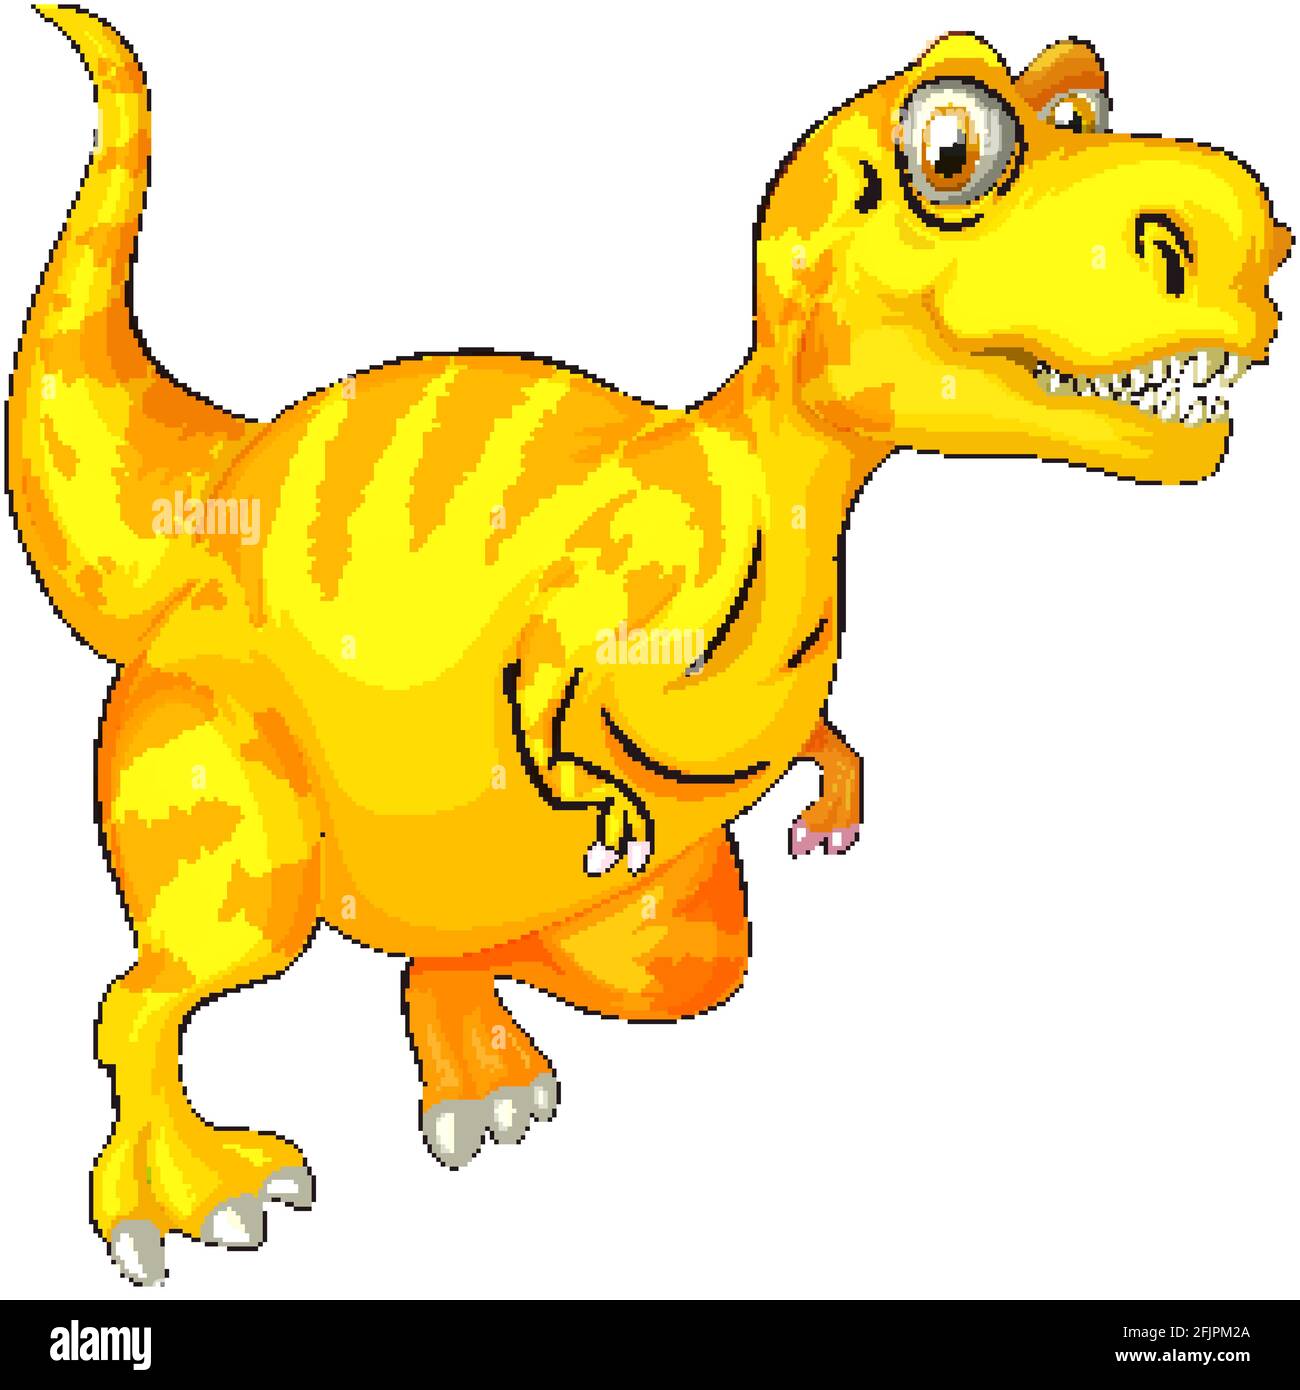 A Raptorex dinosaur cartoon character illustration Stock Vector Image & Art  - Alamy